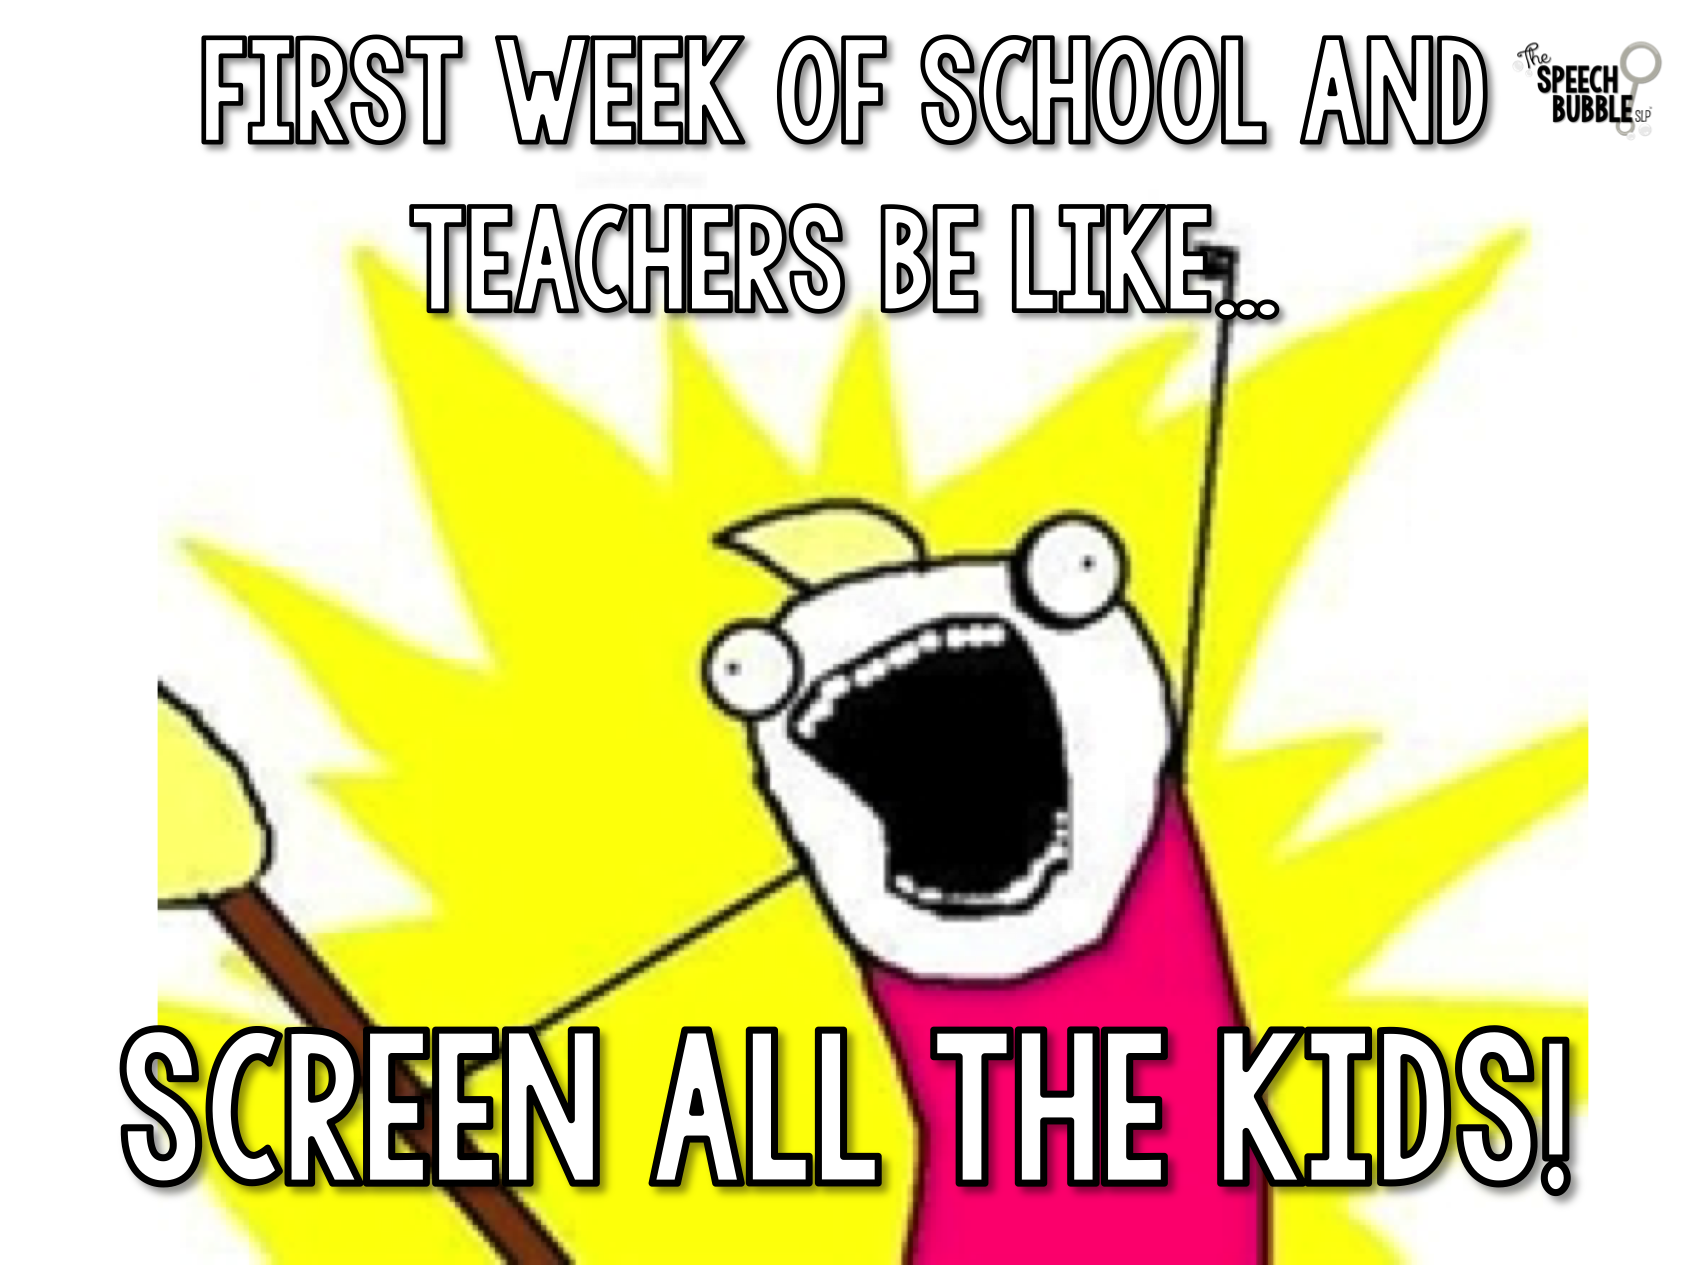 meme first week of school teachers be like screen all the kids